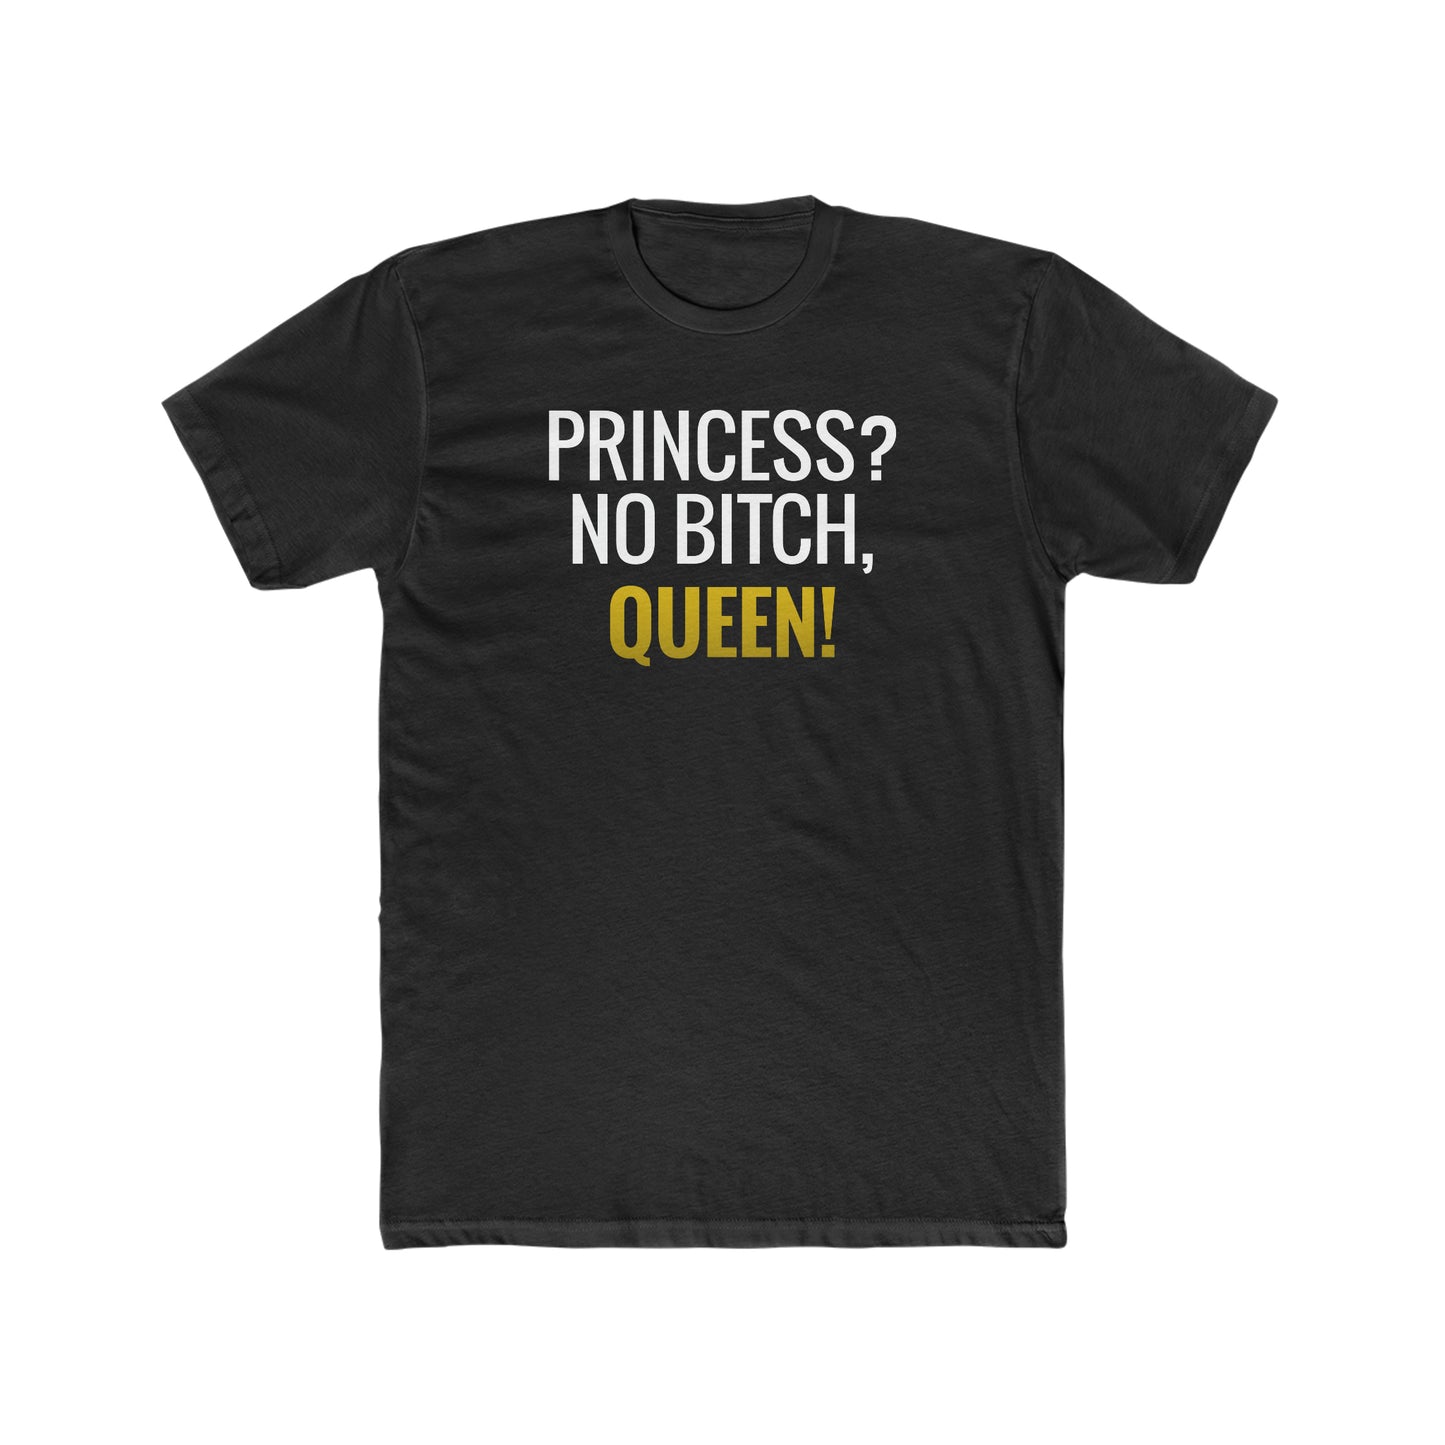 Princess? No Bitch, Queen!